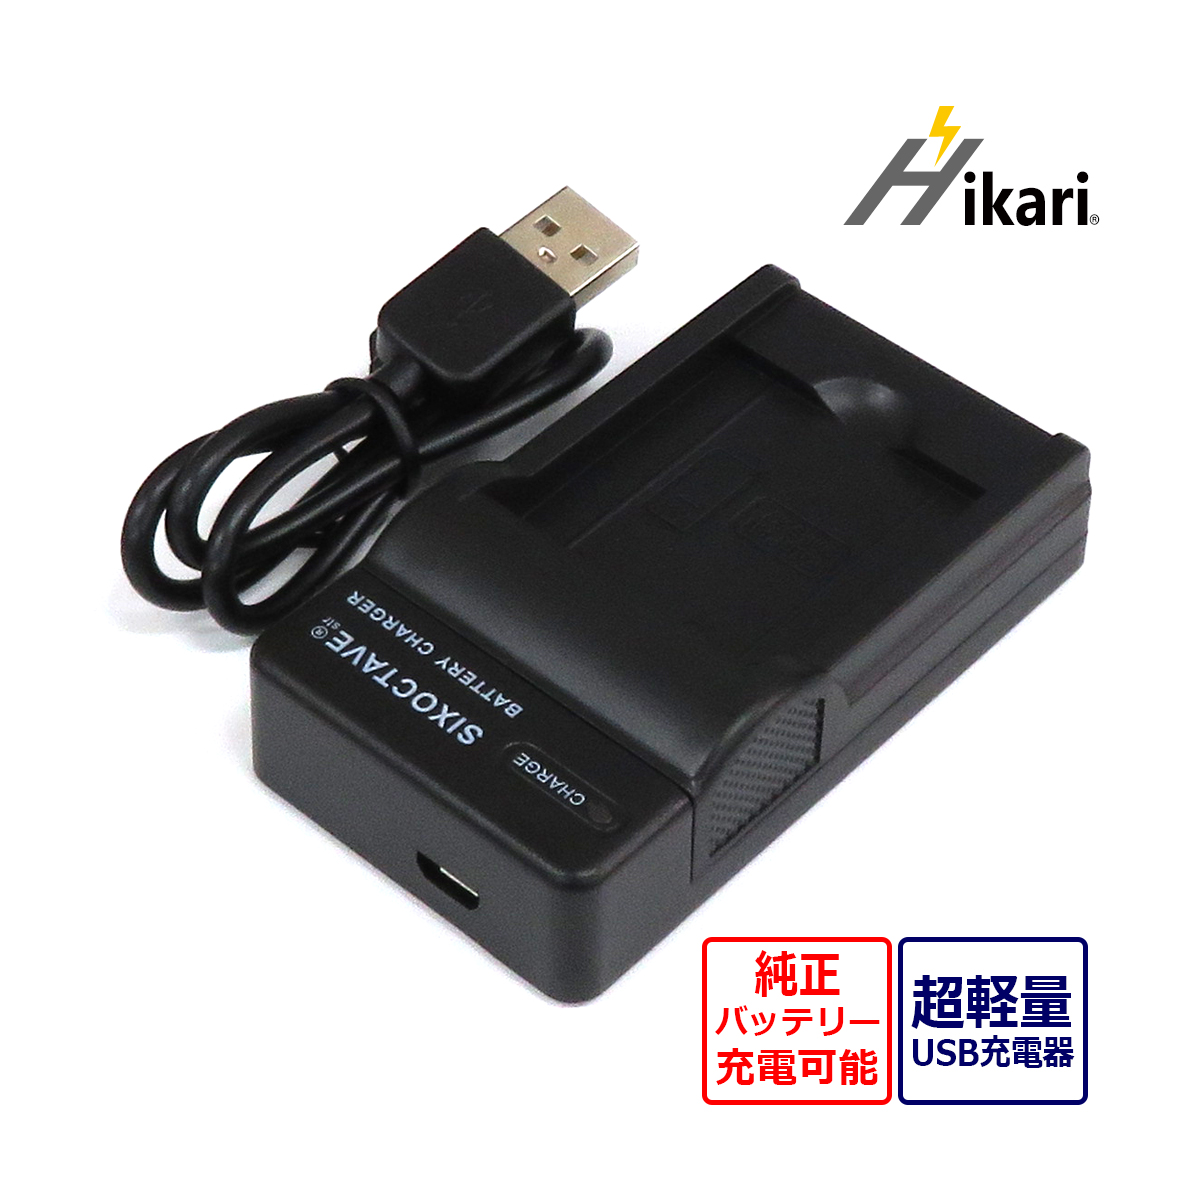 DMW-BCK7 Panasonic Panasonic interchangeable USB charger ACD-341 DMW-BCK7E DMW-BCK7GK DMW-BCK7PP correspondence Lumix Lumix USB charger 